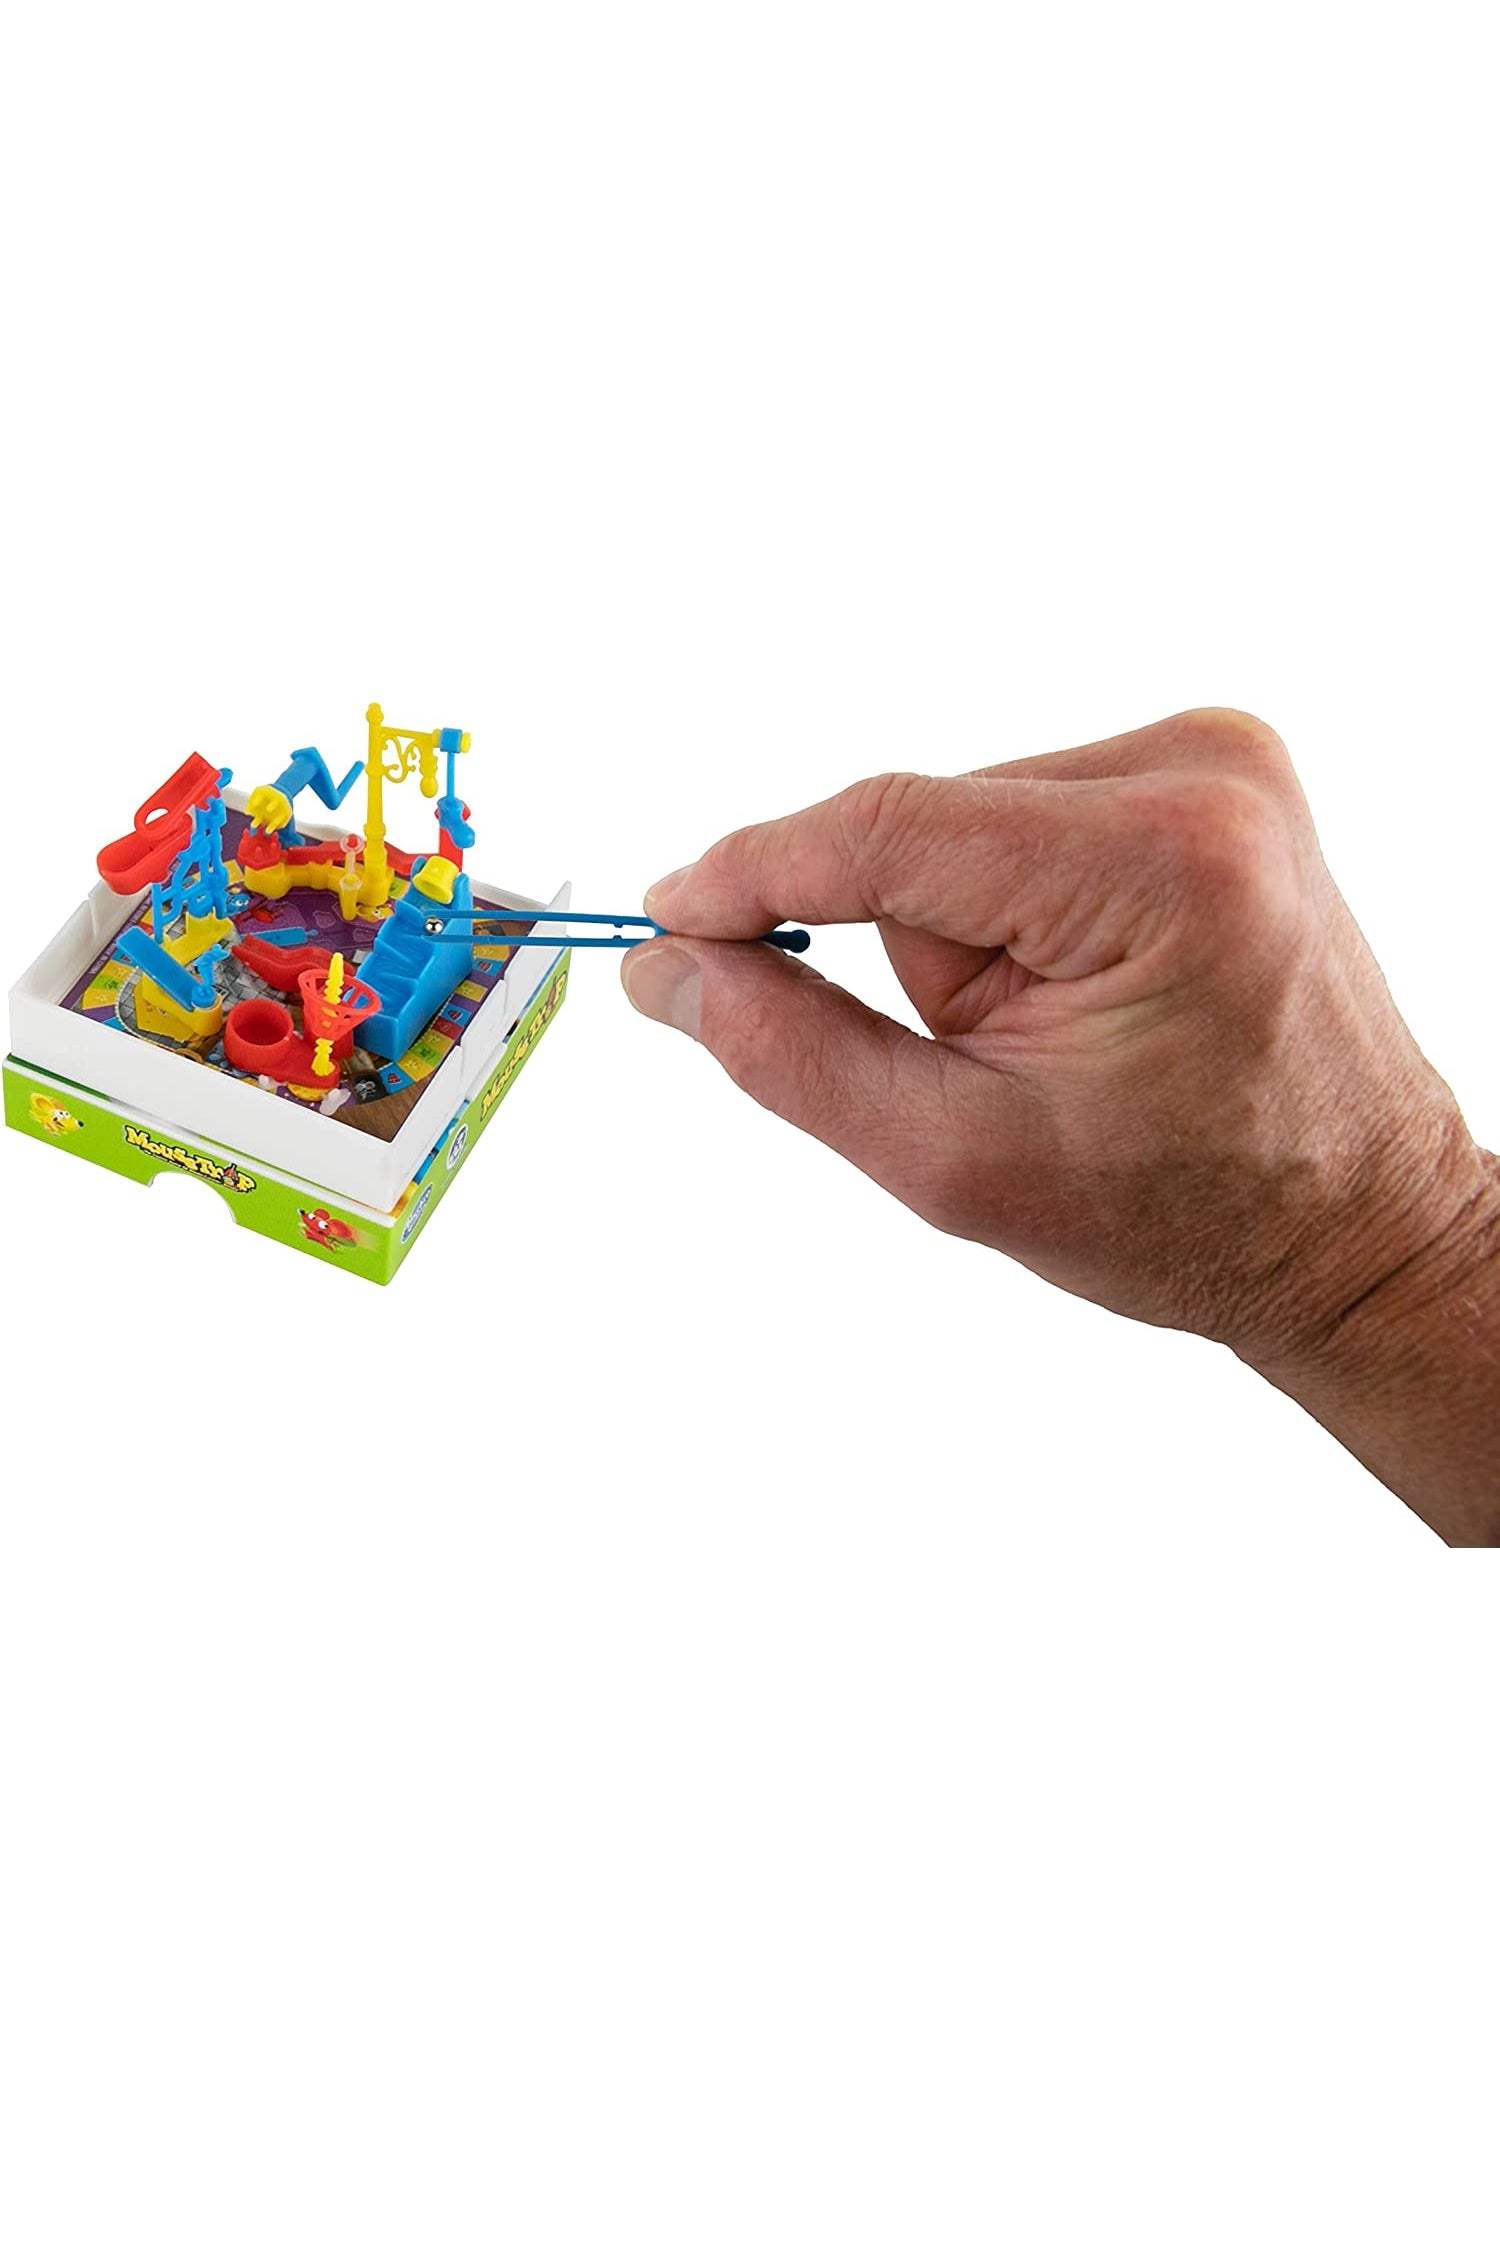 Super Impulse Worlds Smallest Mousetrap Game